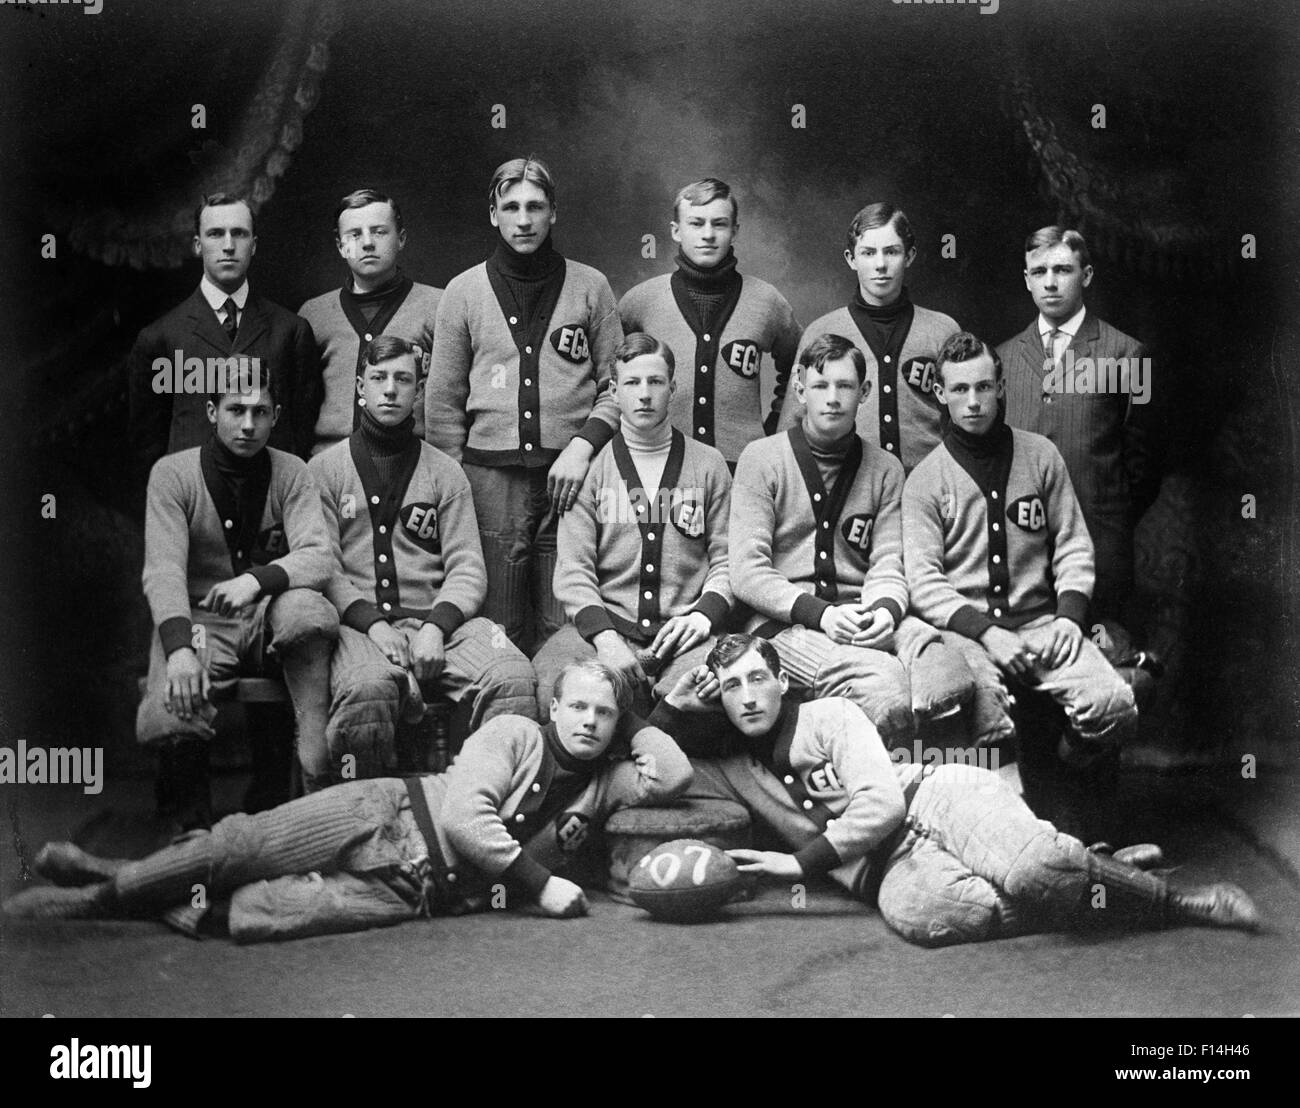 1900s 1907 GROUP PORTRAIT HIGH SCHOOL FOOTBALL TEAM PLAYERS WEARING TEAM UNIFORMS VARSITY SWEATERS Stock Photo